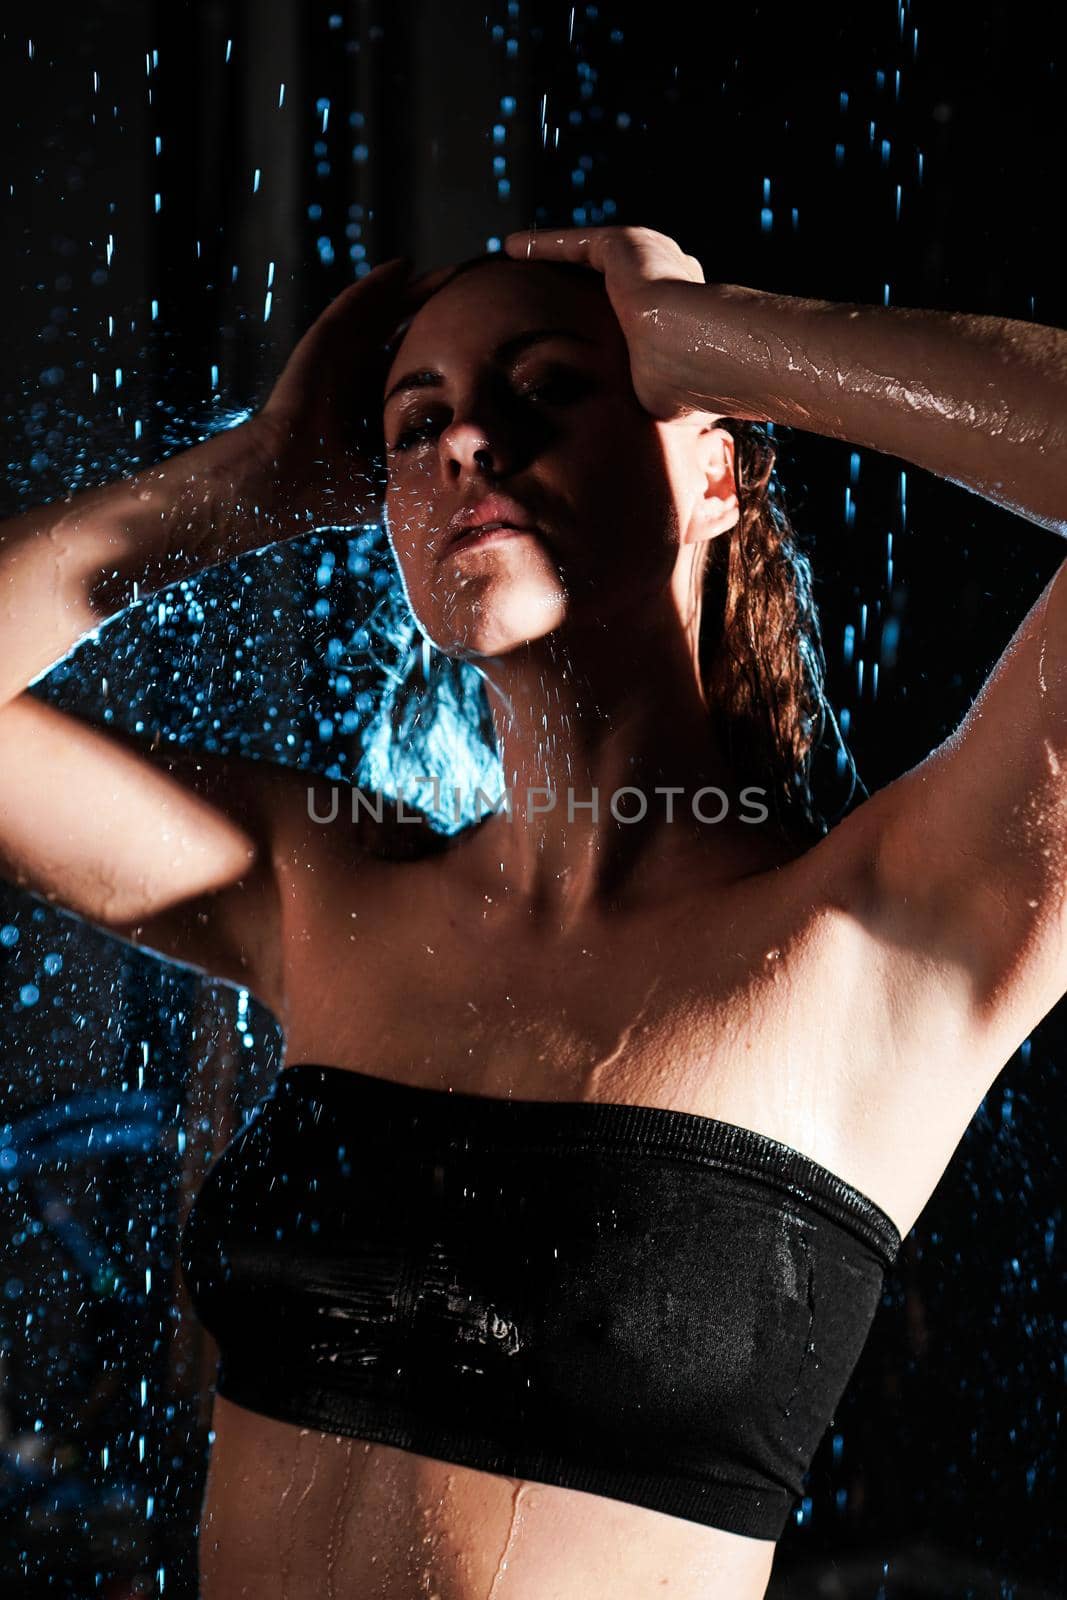 Wet beautiful woman under the falling drops of rain by natali_brill